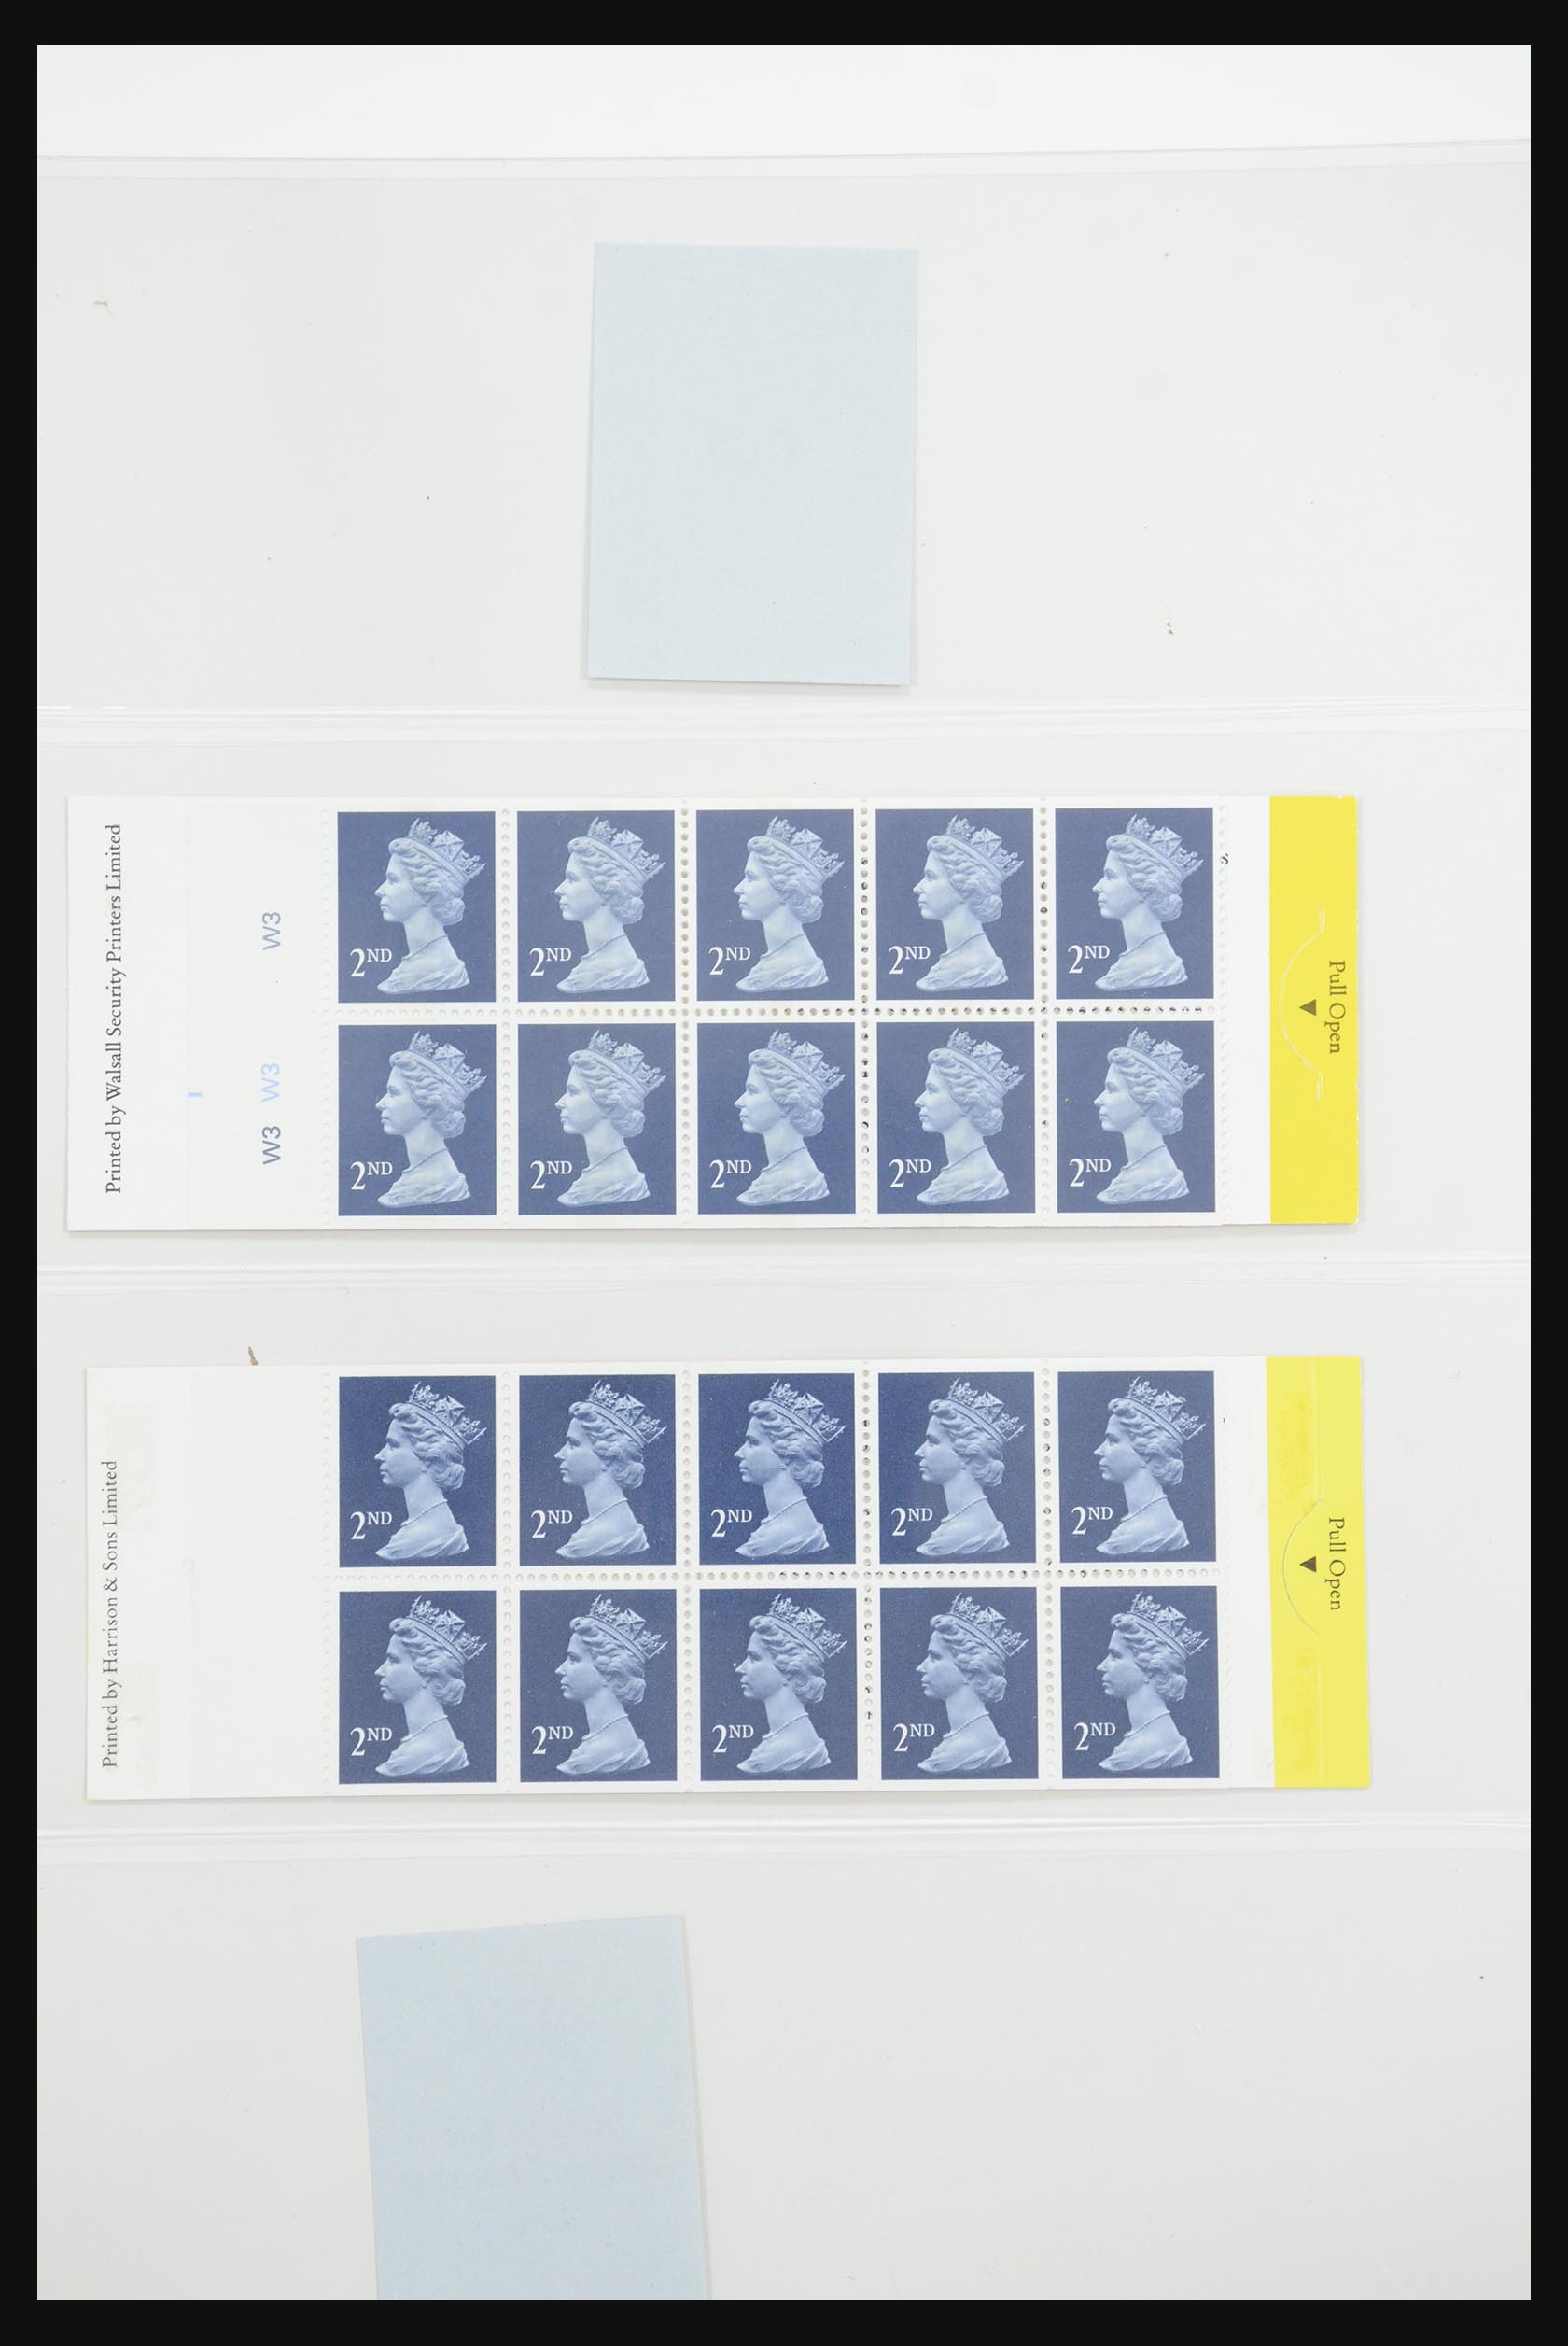 31960 064 - 31960 Great Britain stampbooklets 1989-2000.